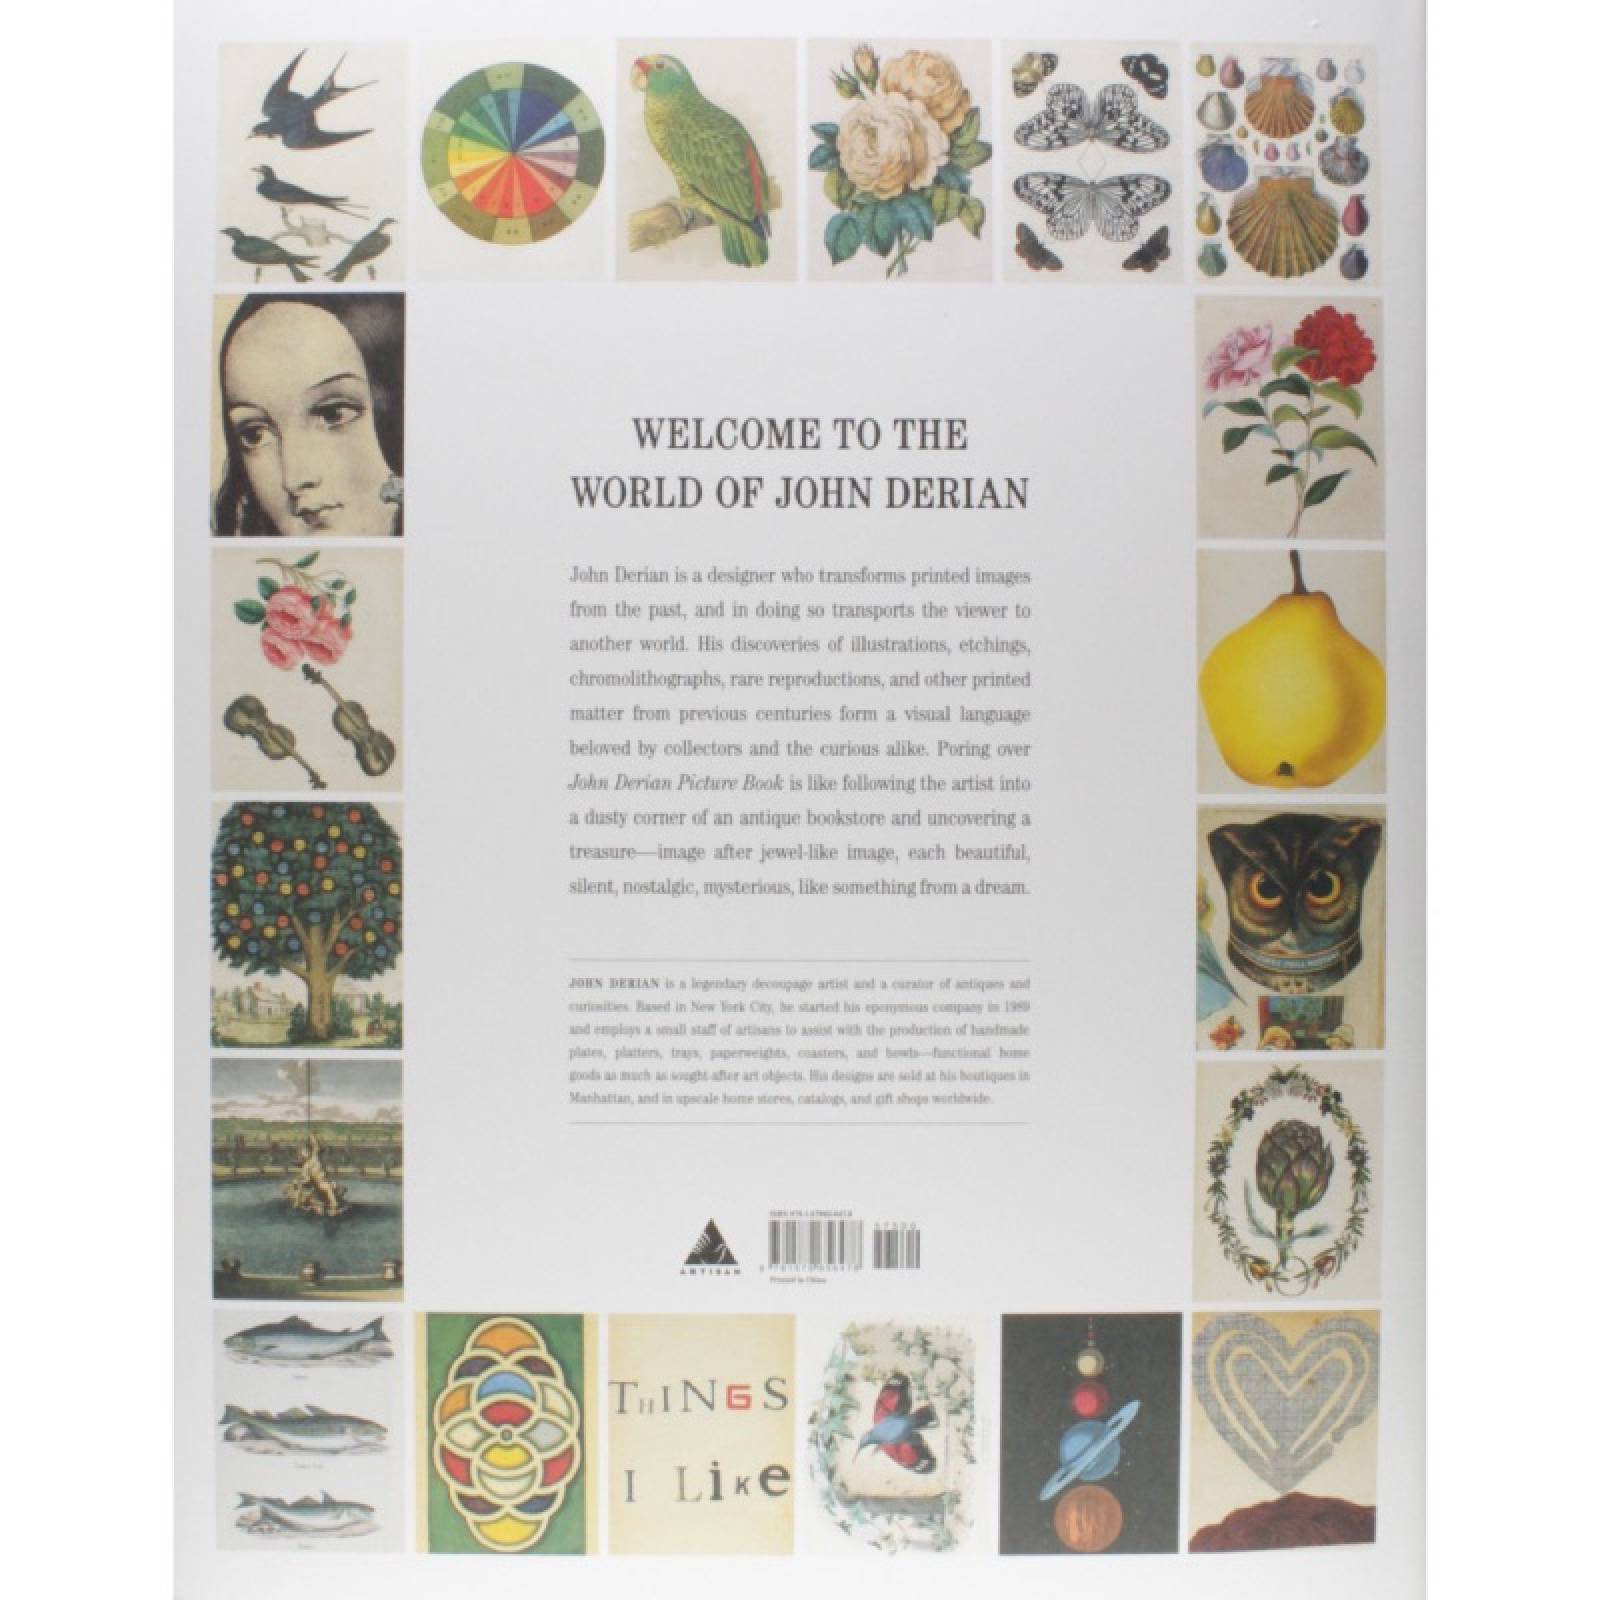 John Derian Picture Book thumbnails